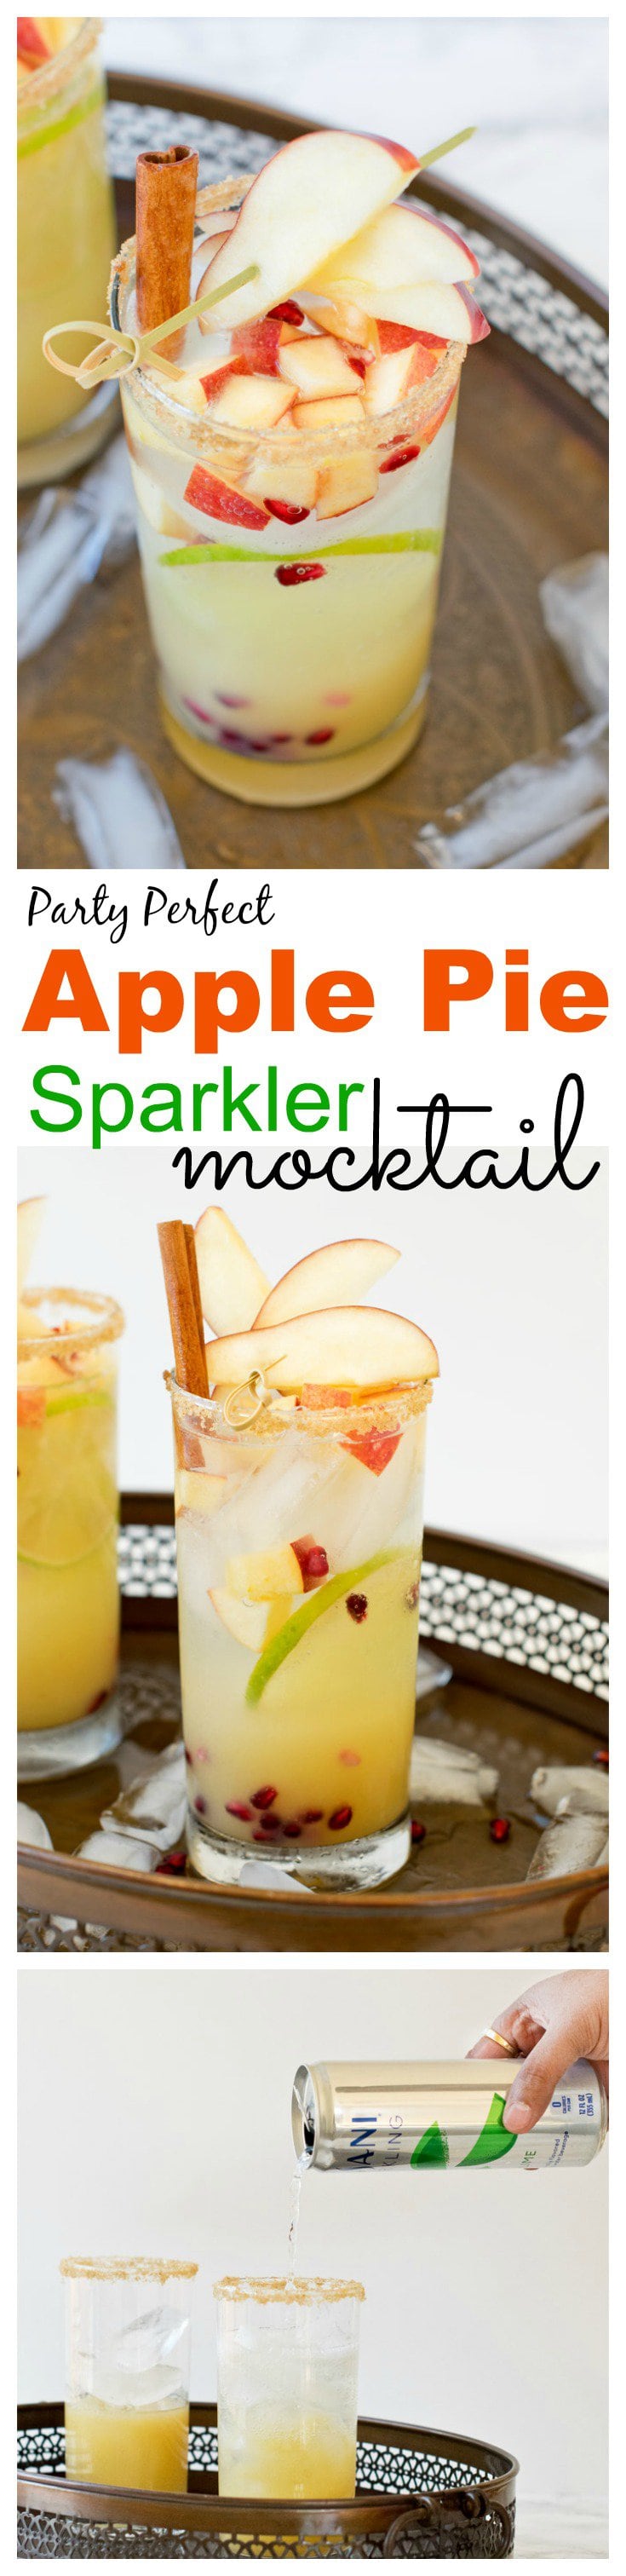 apple-pie-sparkler-non-alcoholic-drink